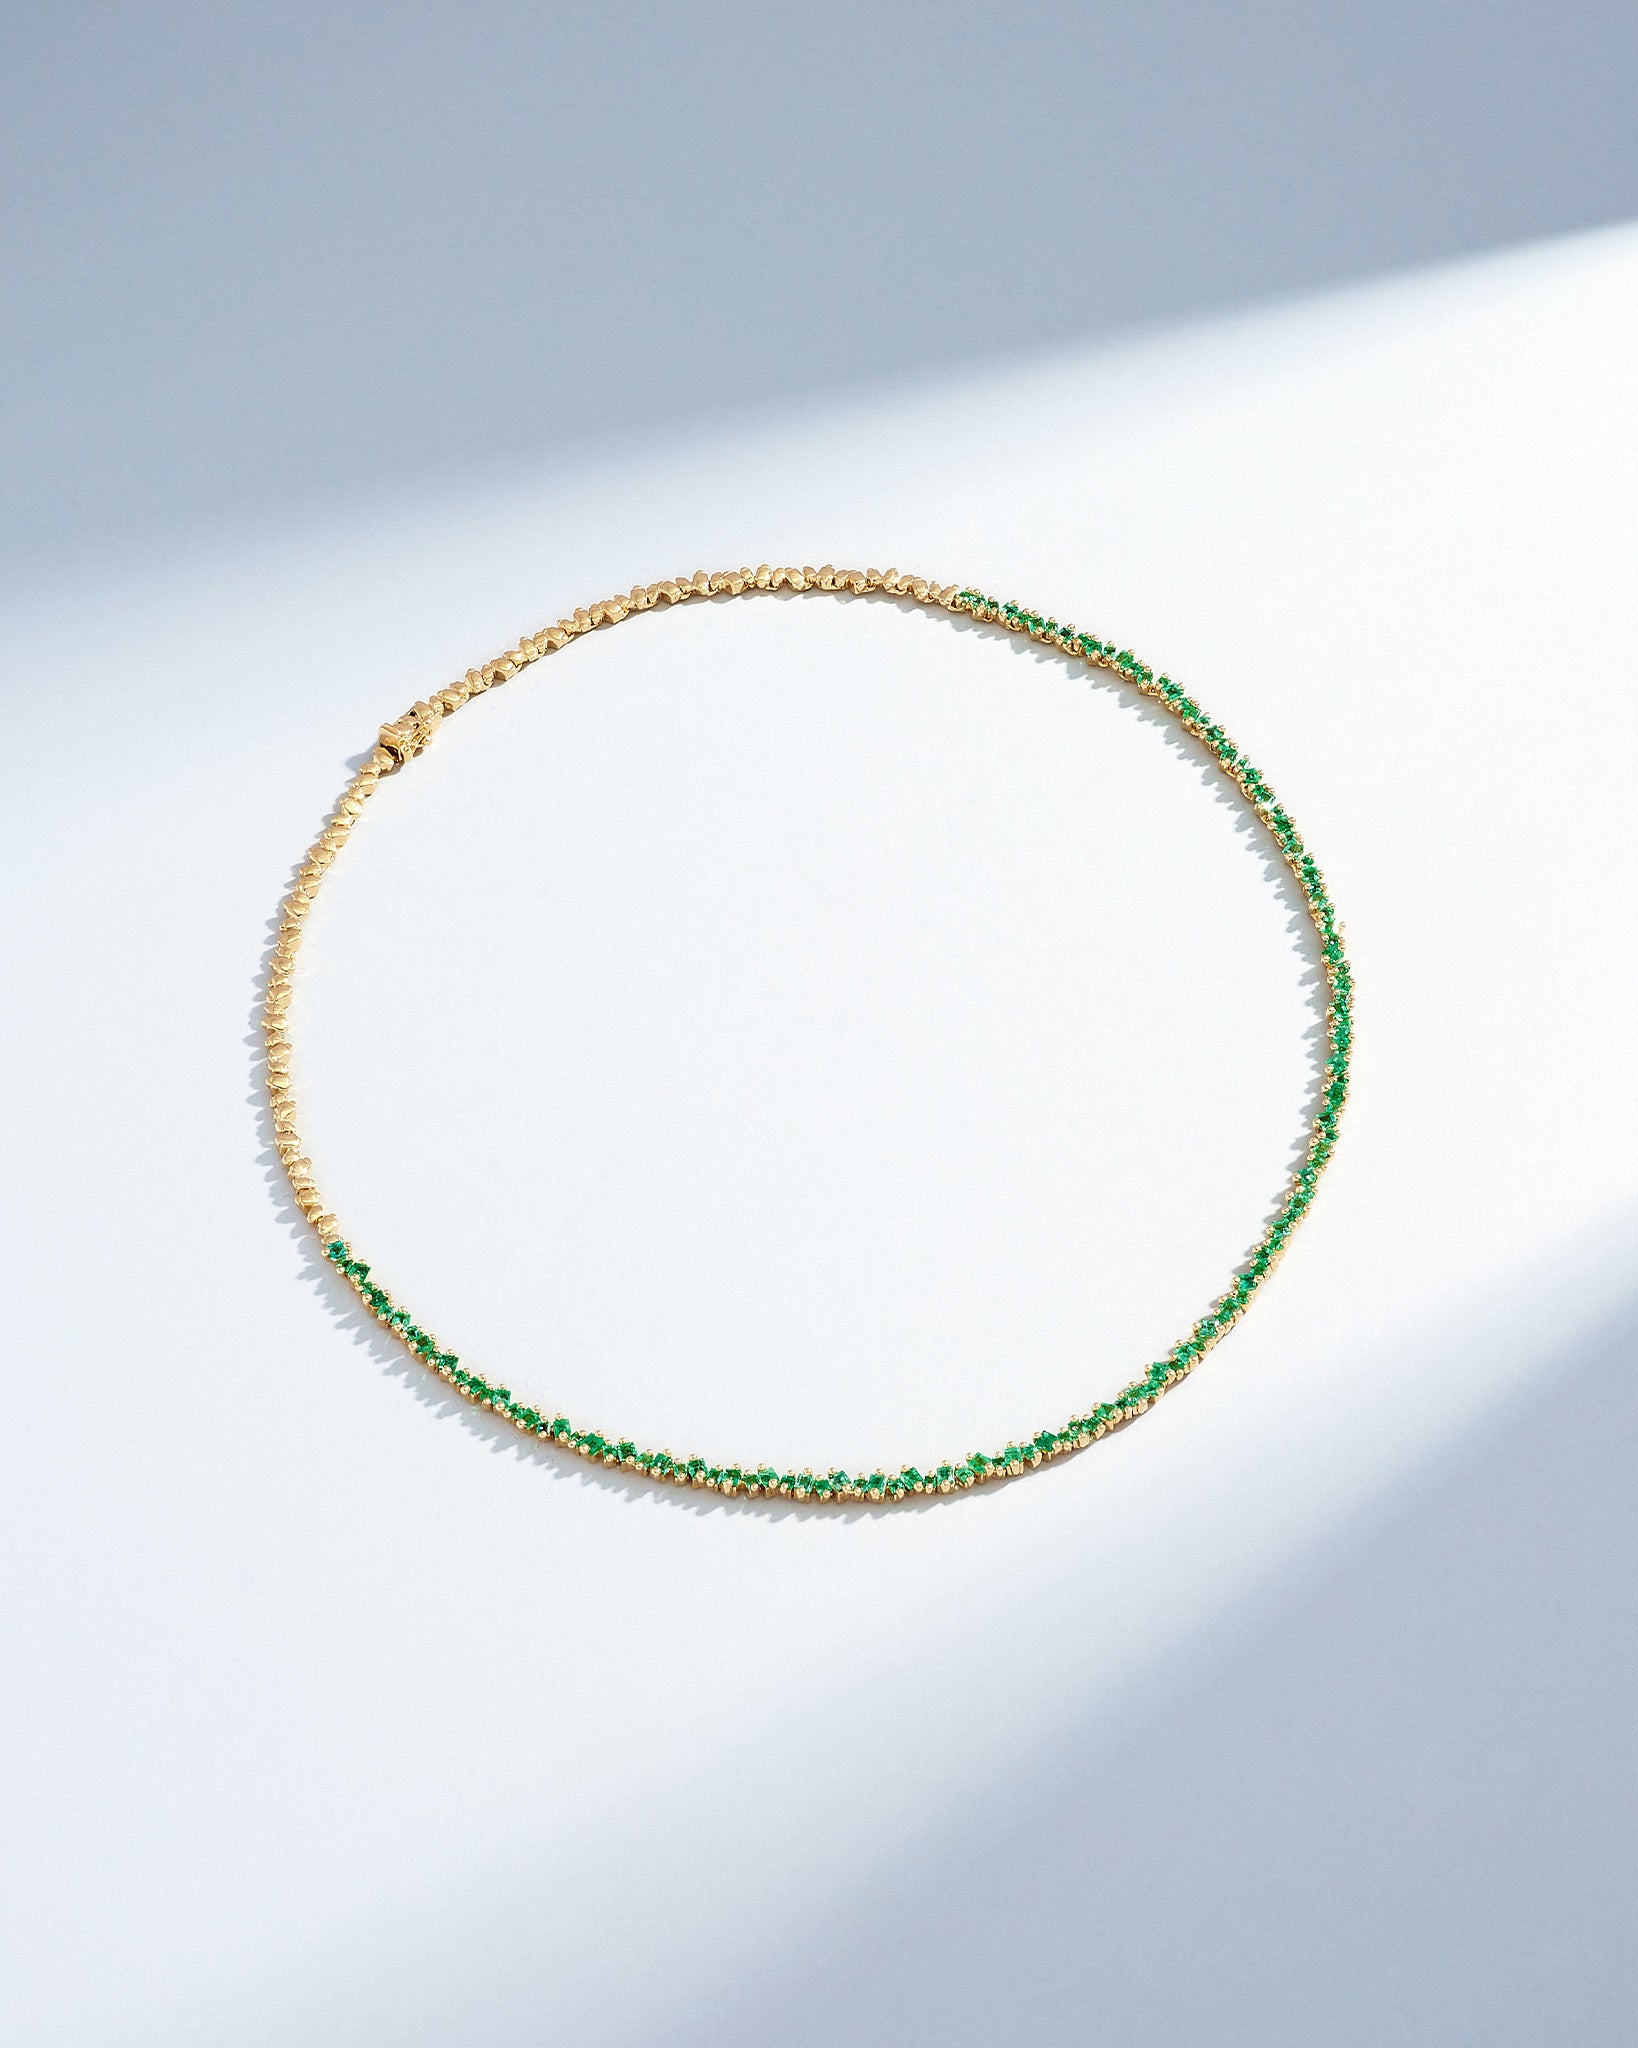 Suzanne Kalan La Fantaisie Cosmic Emerald Tennis Necklace in 18k yellow gold